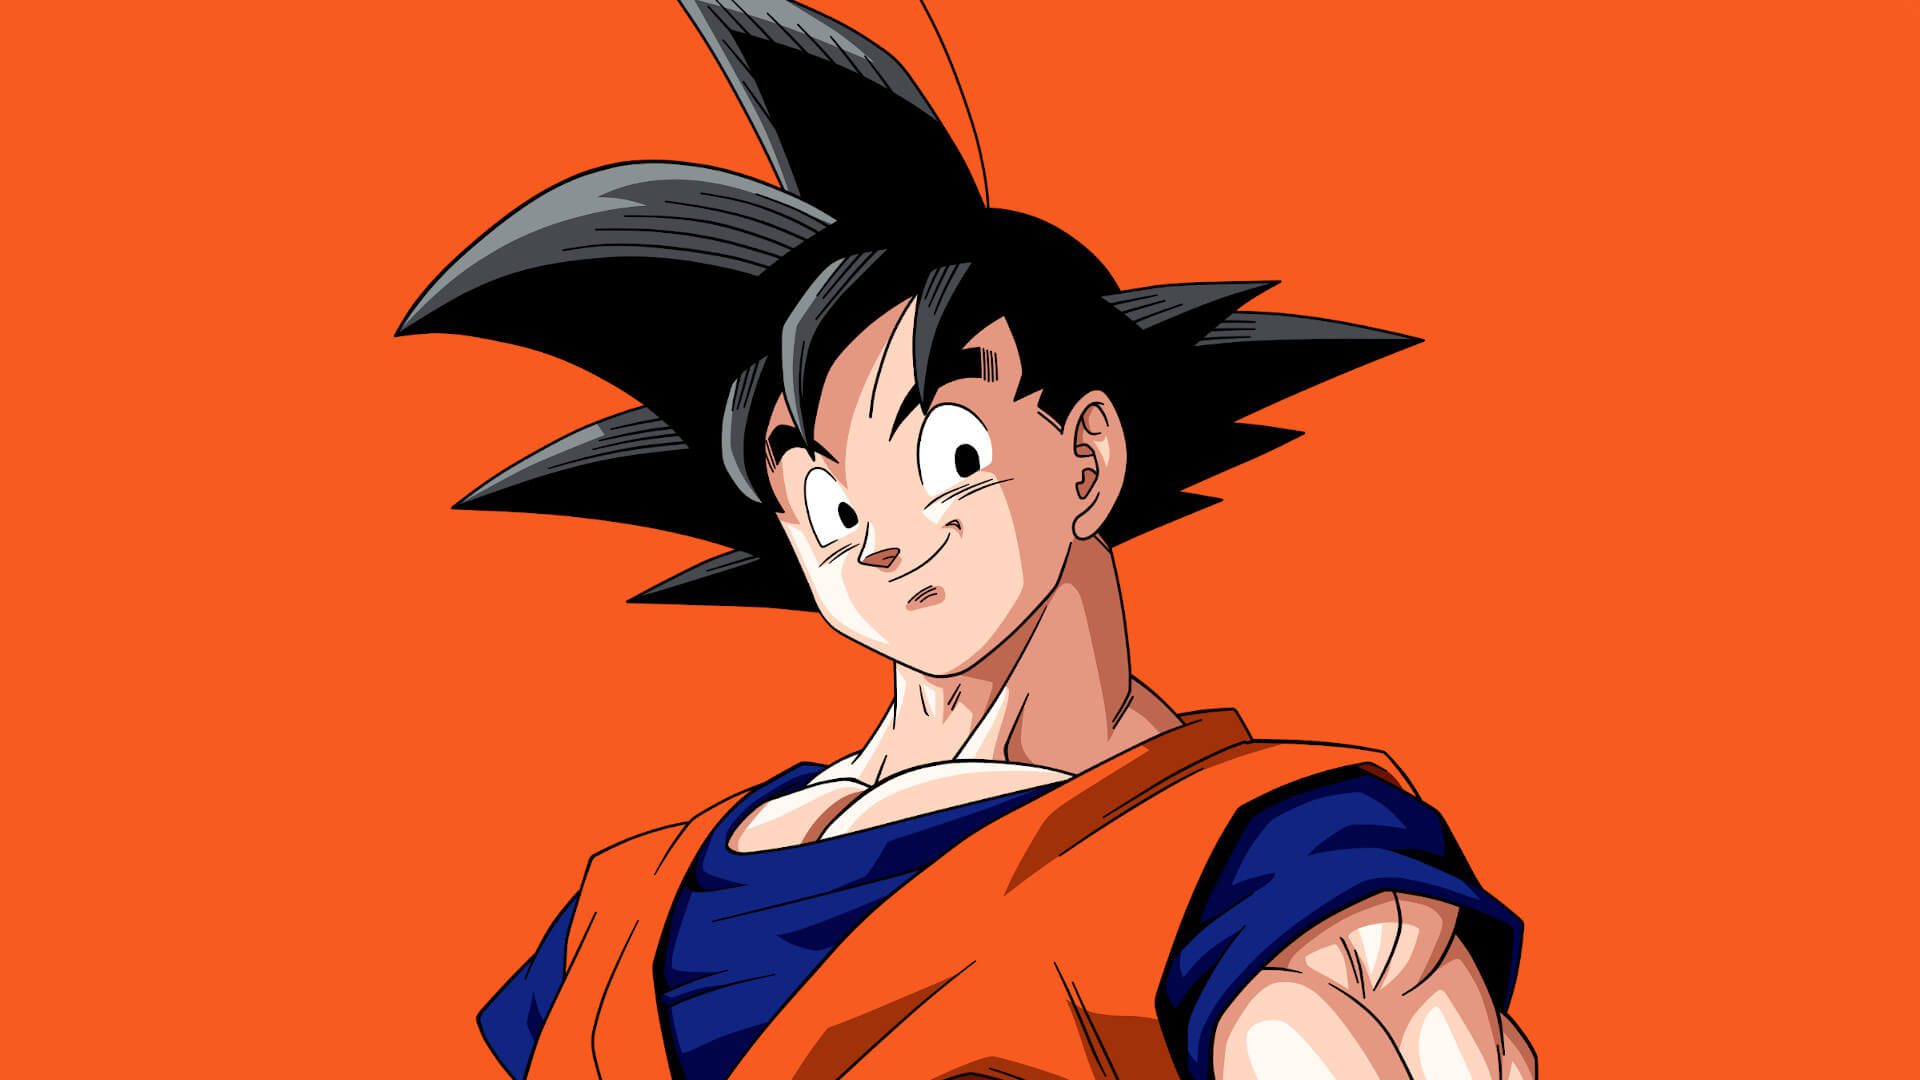 How Strong is Final Gohan Compared to Goku & Vegeta